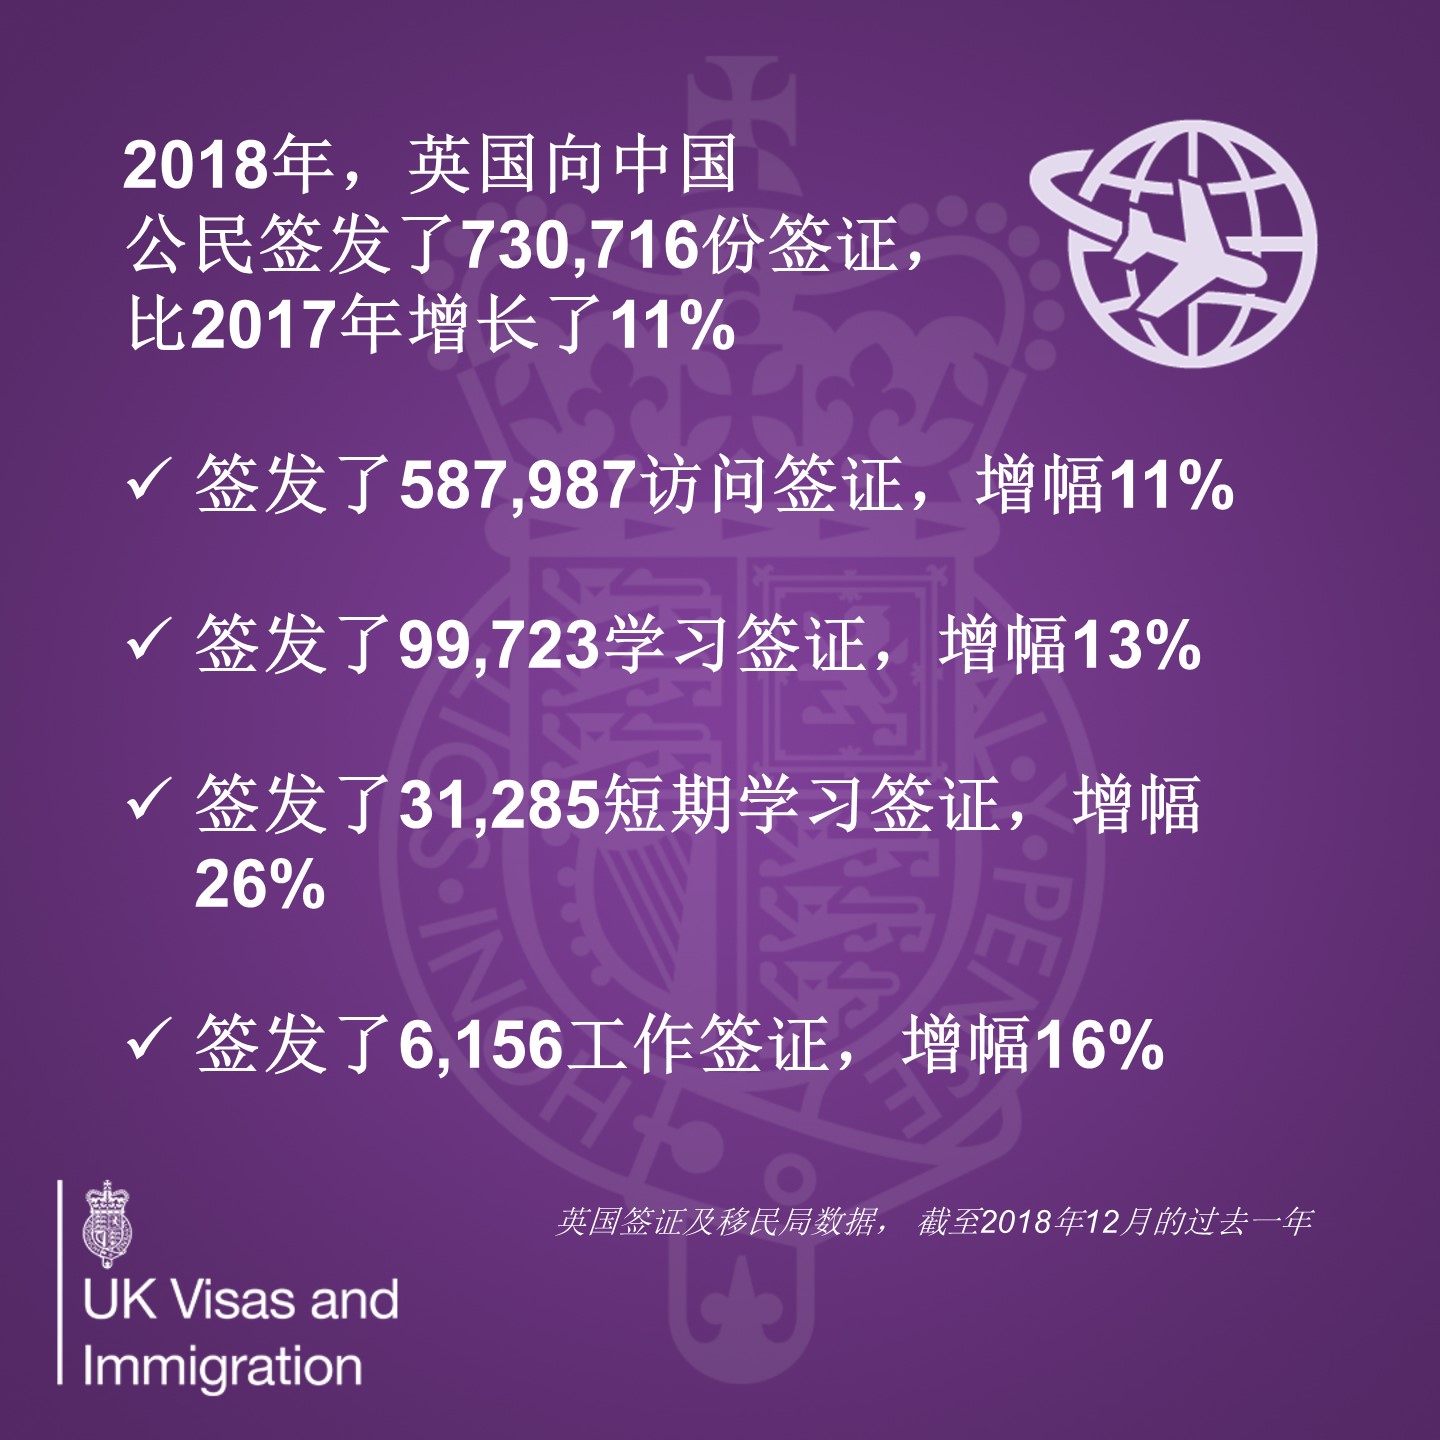 2018 UK visa statistics.JPG